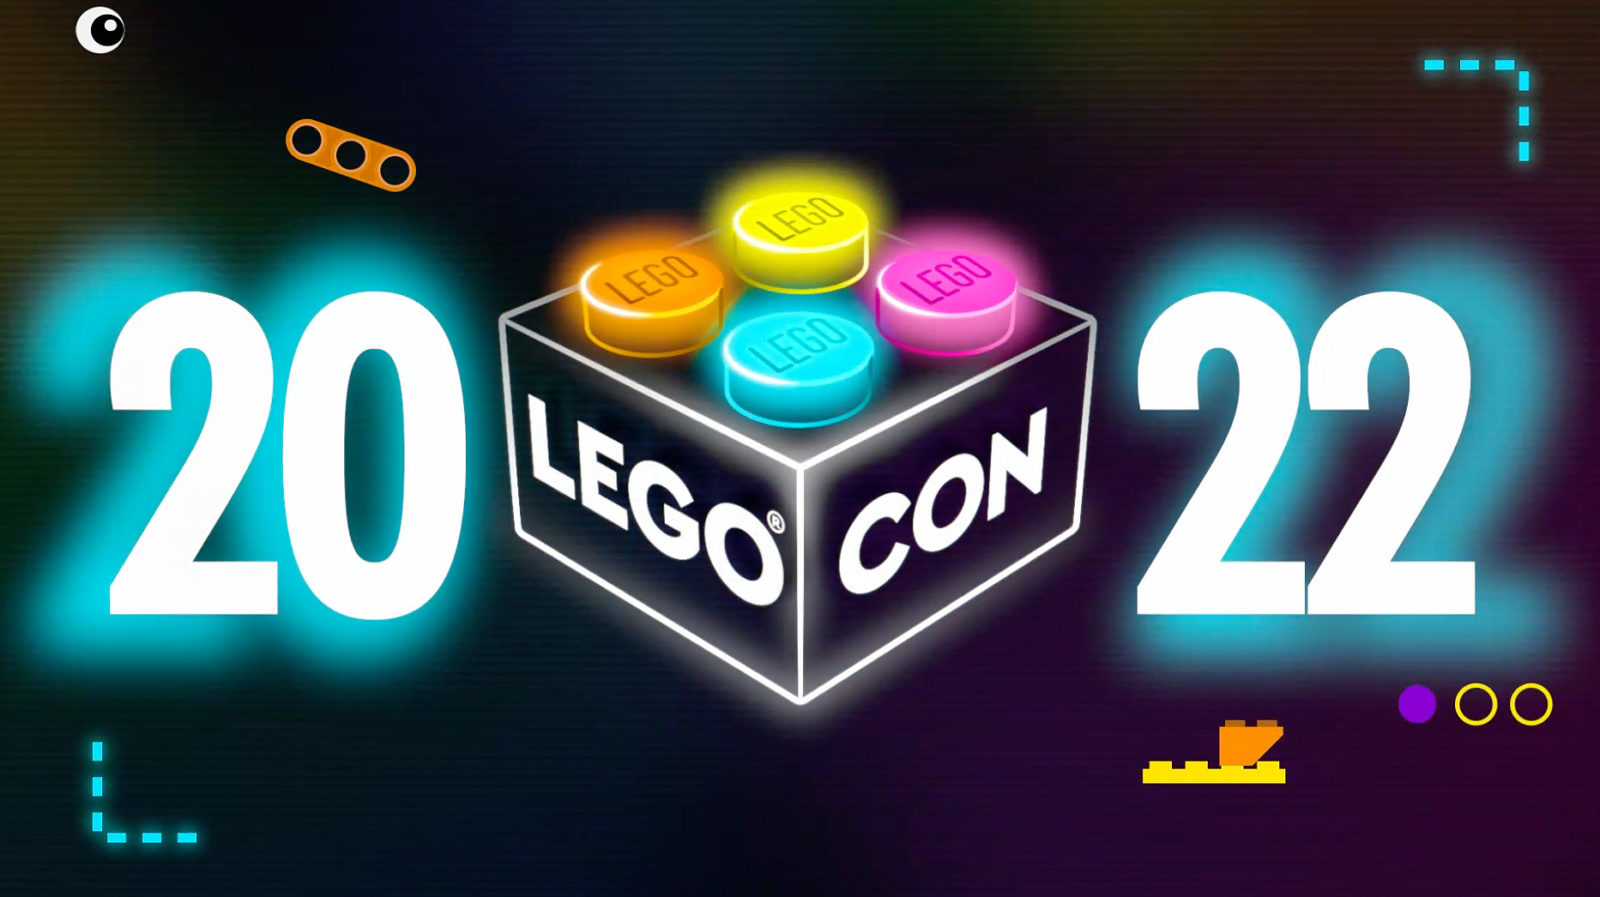 LEGO CON 2022៖ អនុសញ្ញា LEGO Online ត្រលប់មកវិញនៅថ្ងៃទី 18 ខែមិថុនា ឆ្នាំ 2022